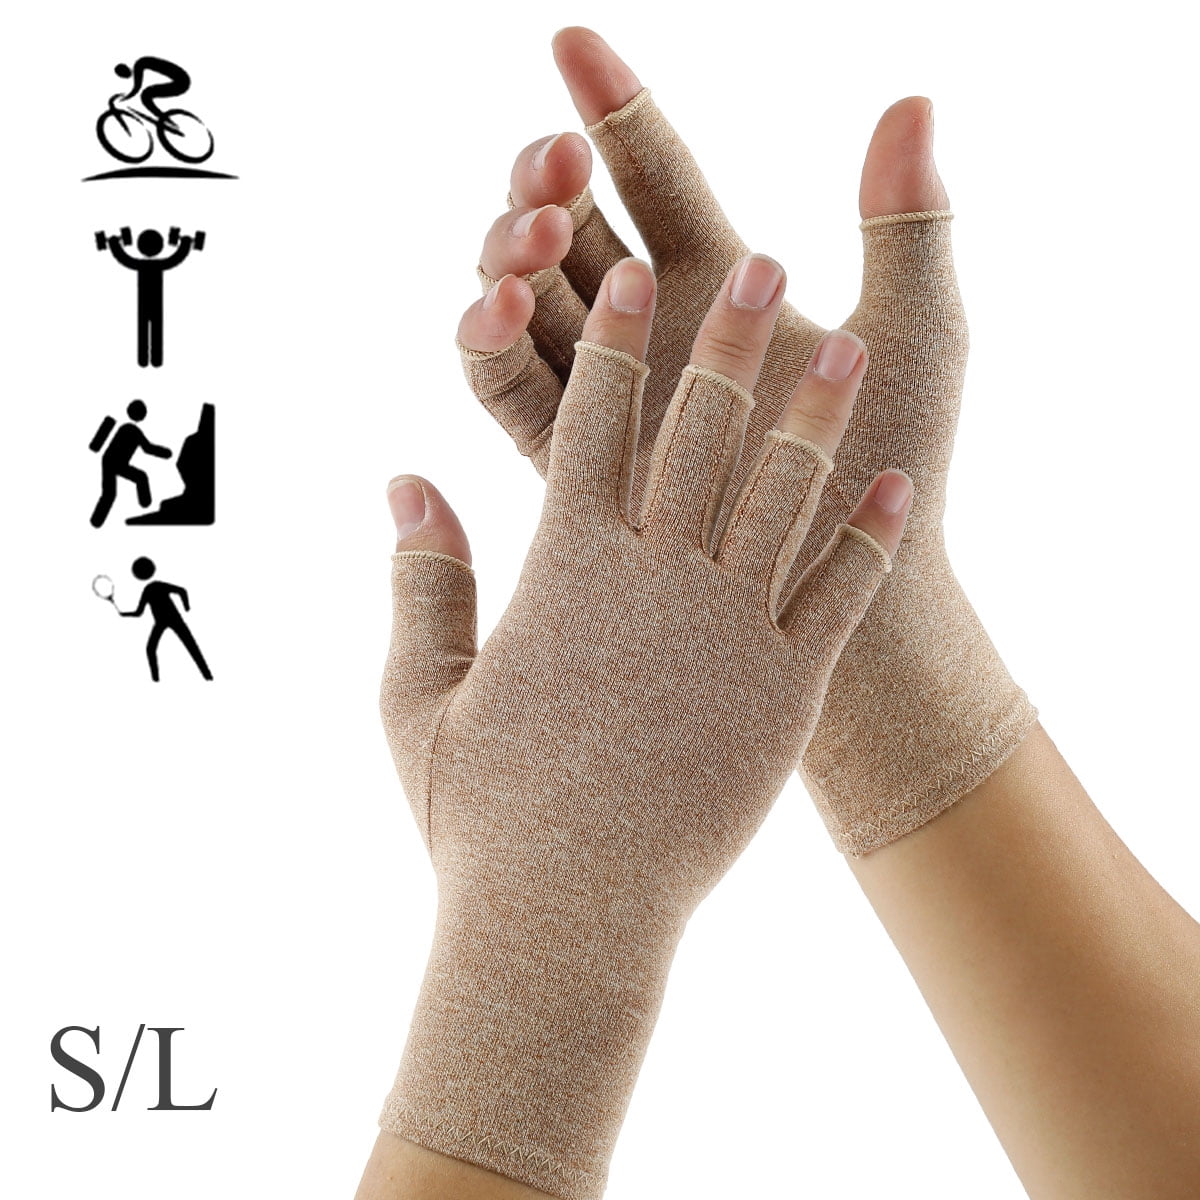 AoHao Willstar 1Pair Arthritis Compression Gloves Fit Hand Wrist